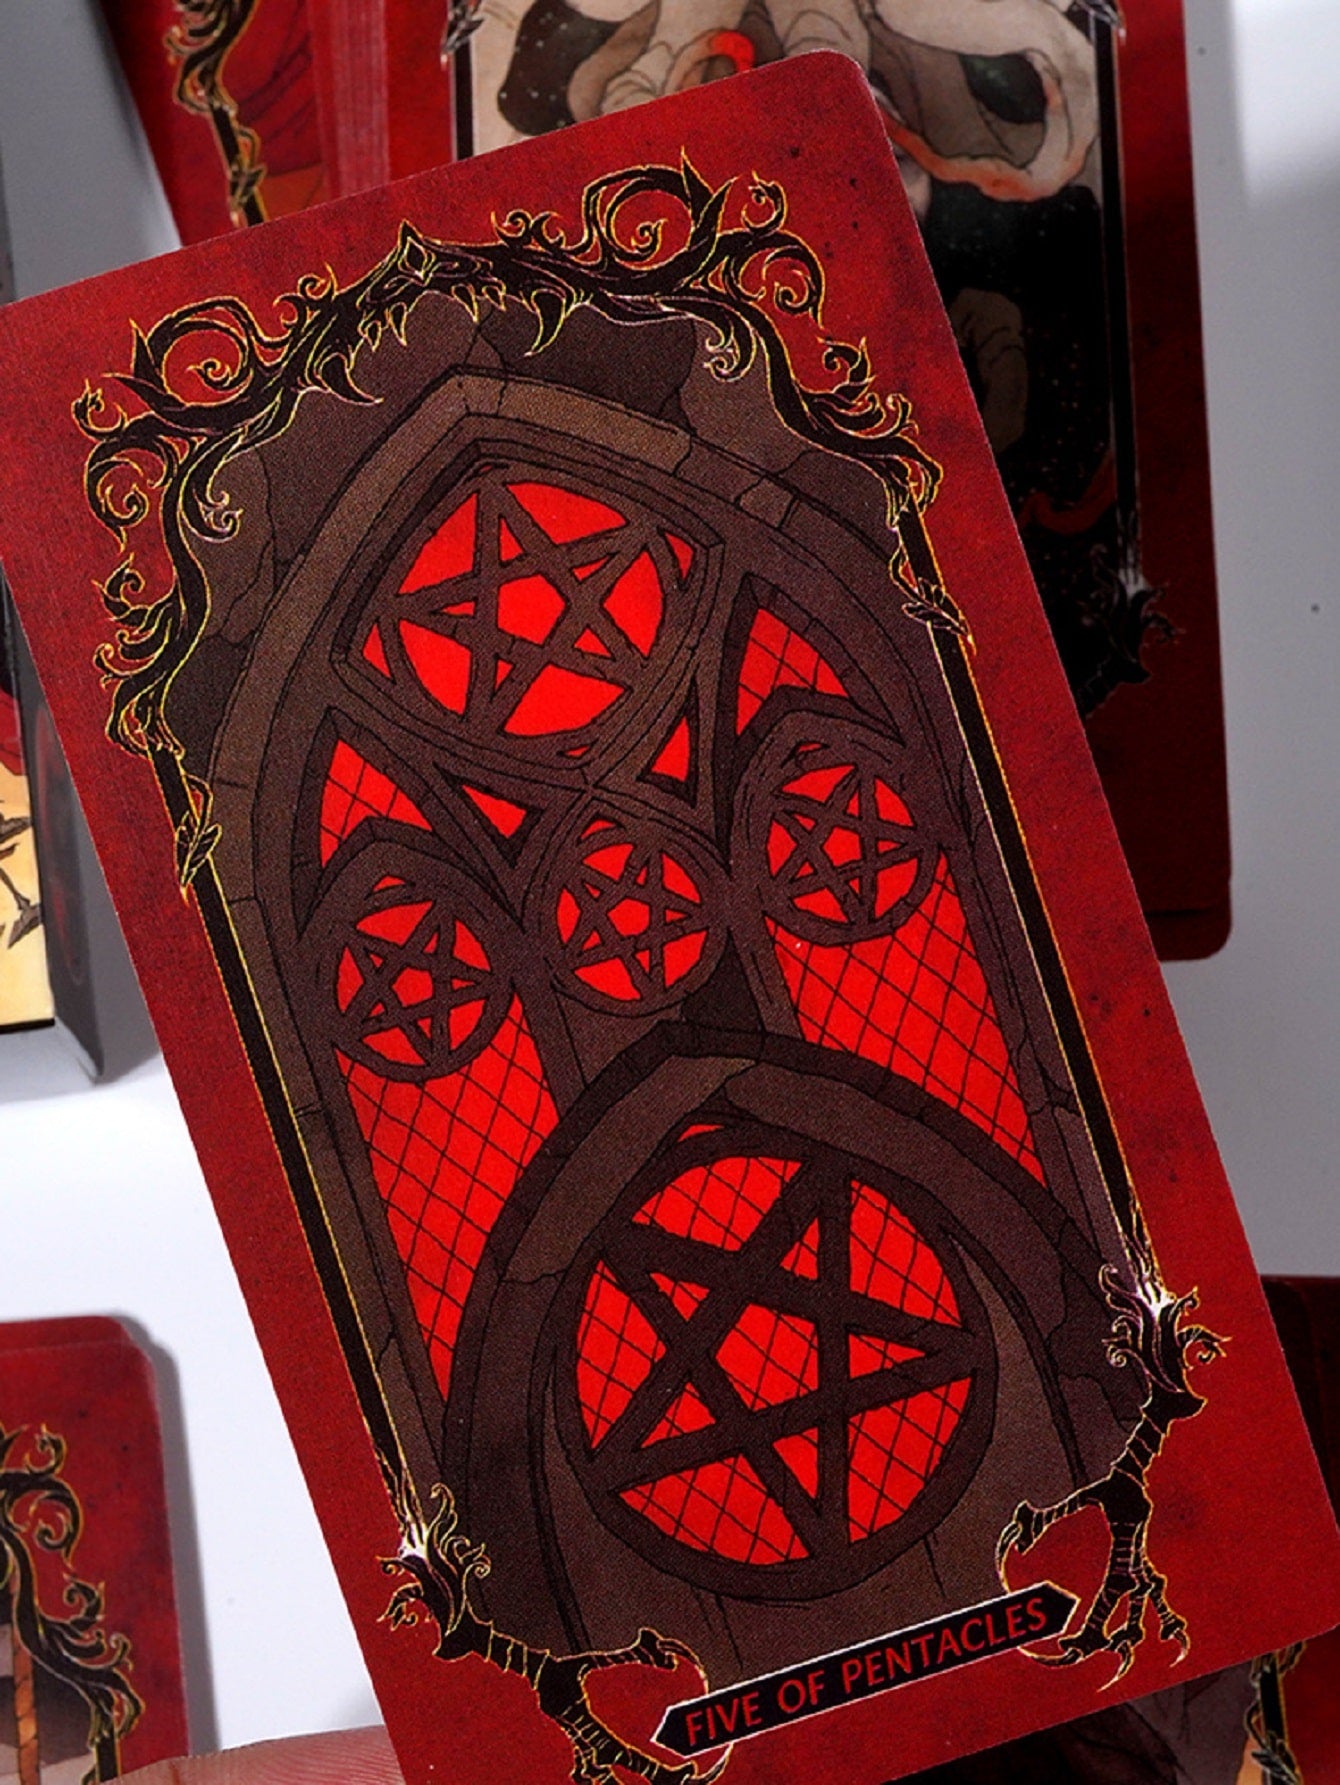 Thrilling Horror Tarot Card Game!